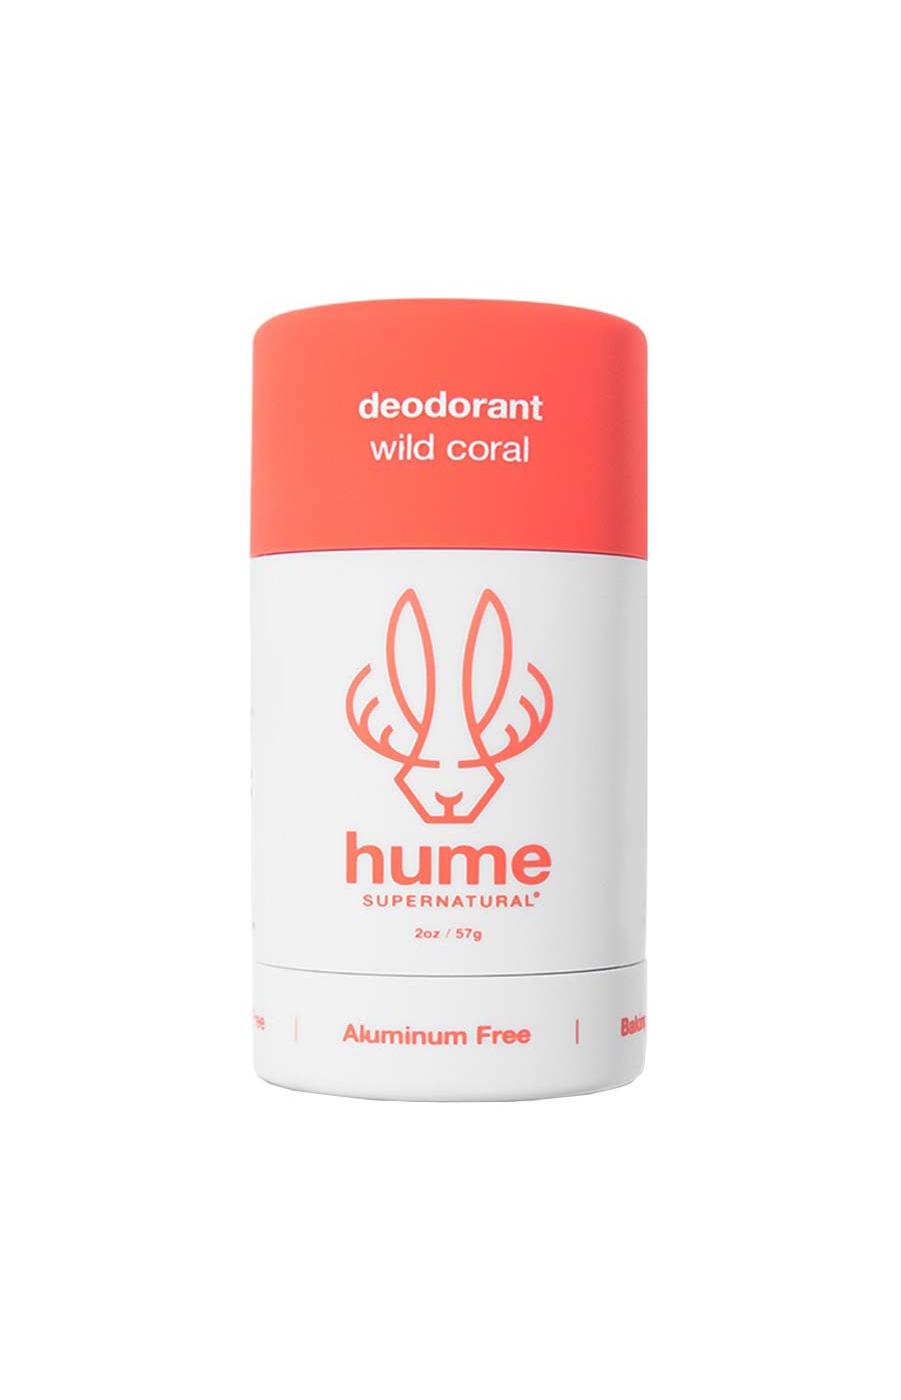 Hume Supernatural Deodorant - Wild Coral; image 1 of 2